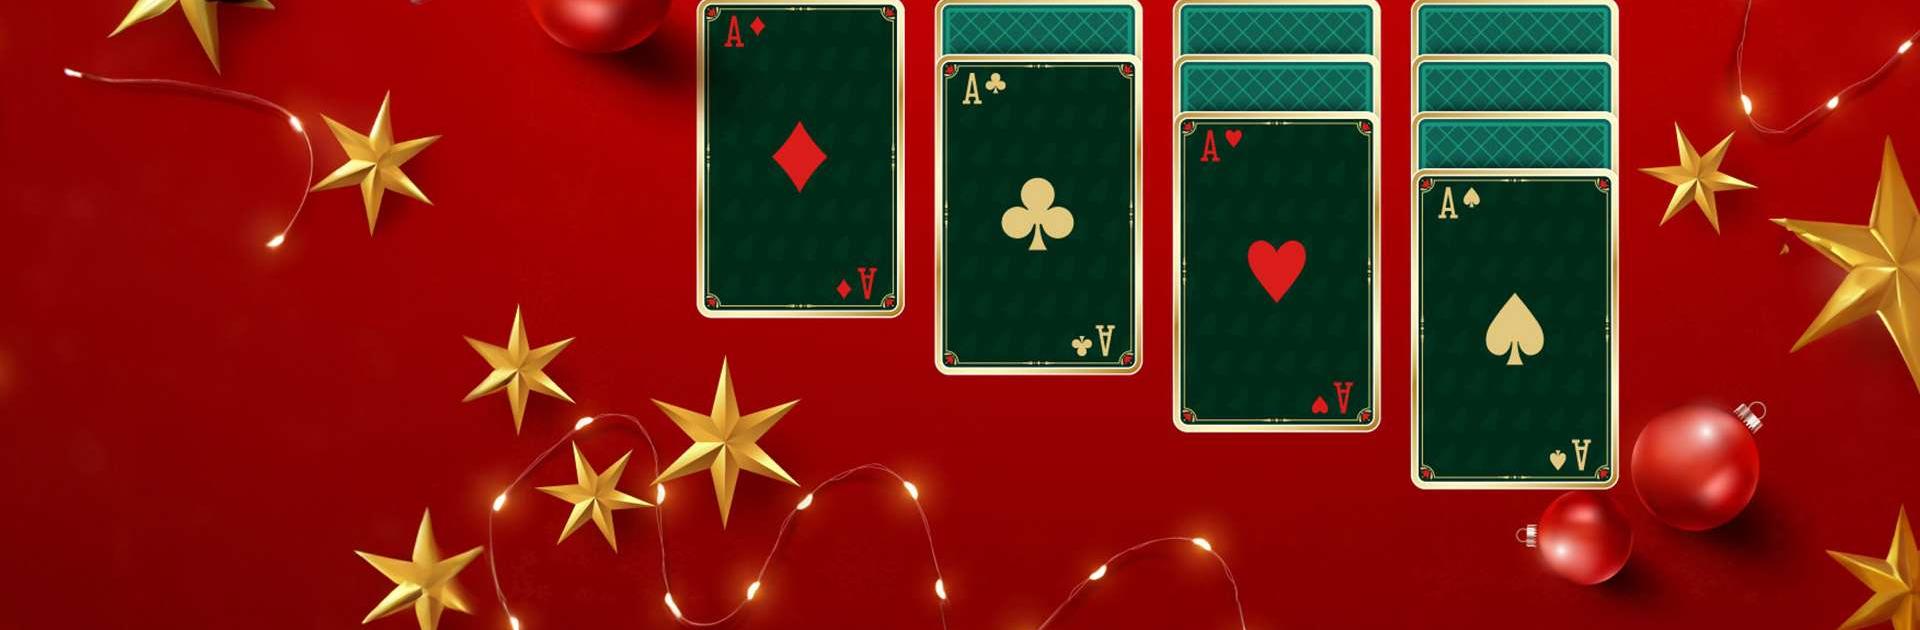 🕹️ Play Christmas Solitaire Game: Free Online Christmas Klondike